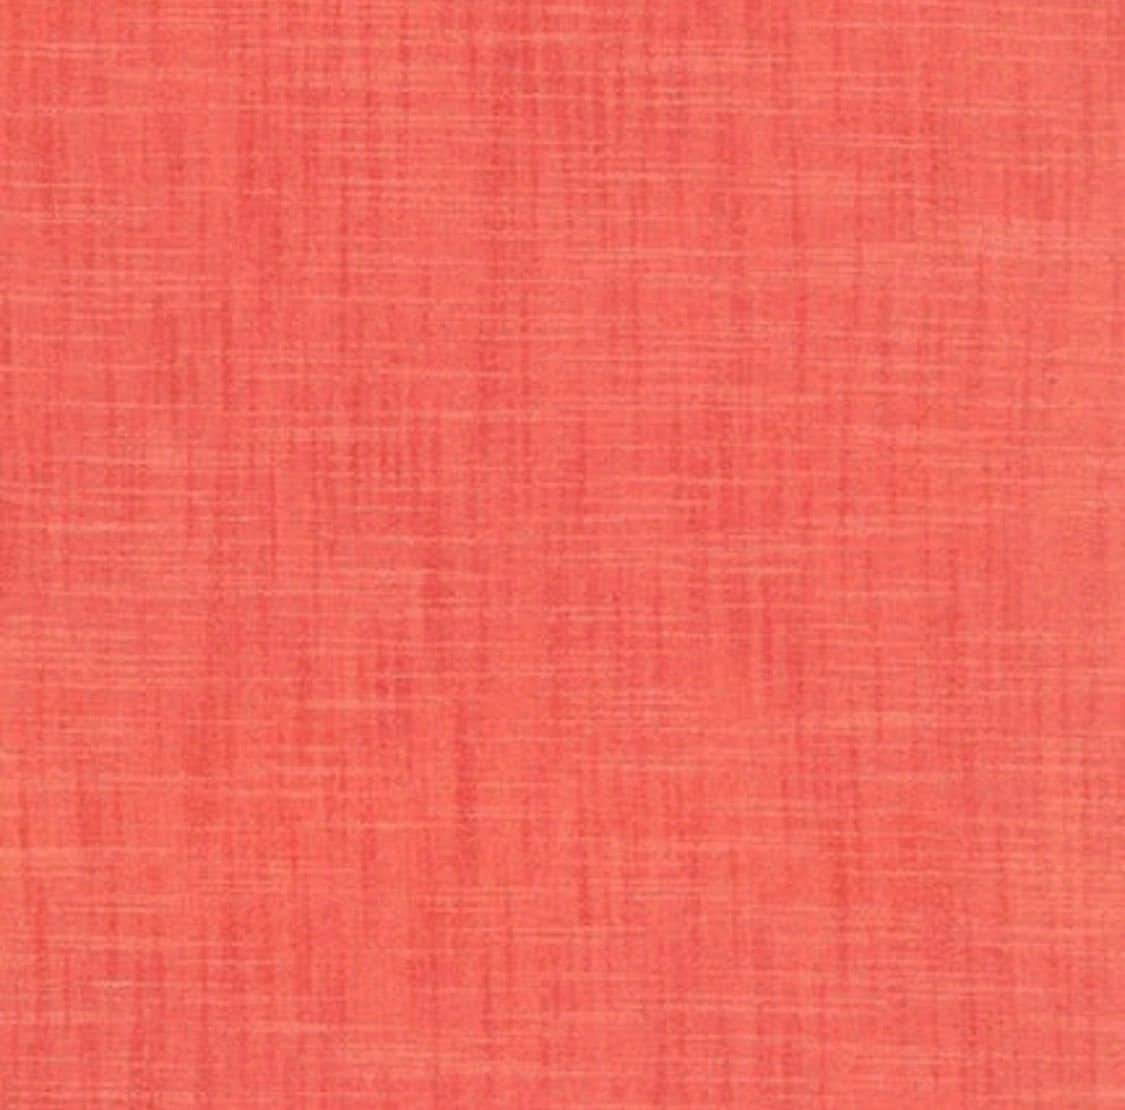 Manchester Yarn Dyed - Poppy by Robert Kaufman- 100% cotton